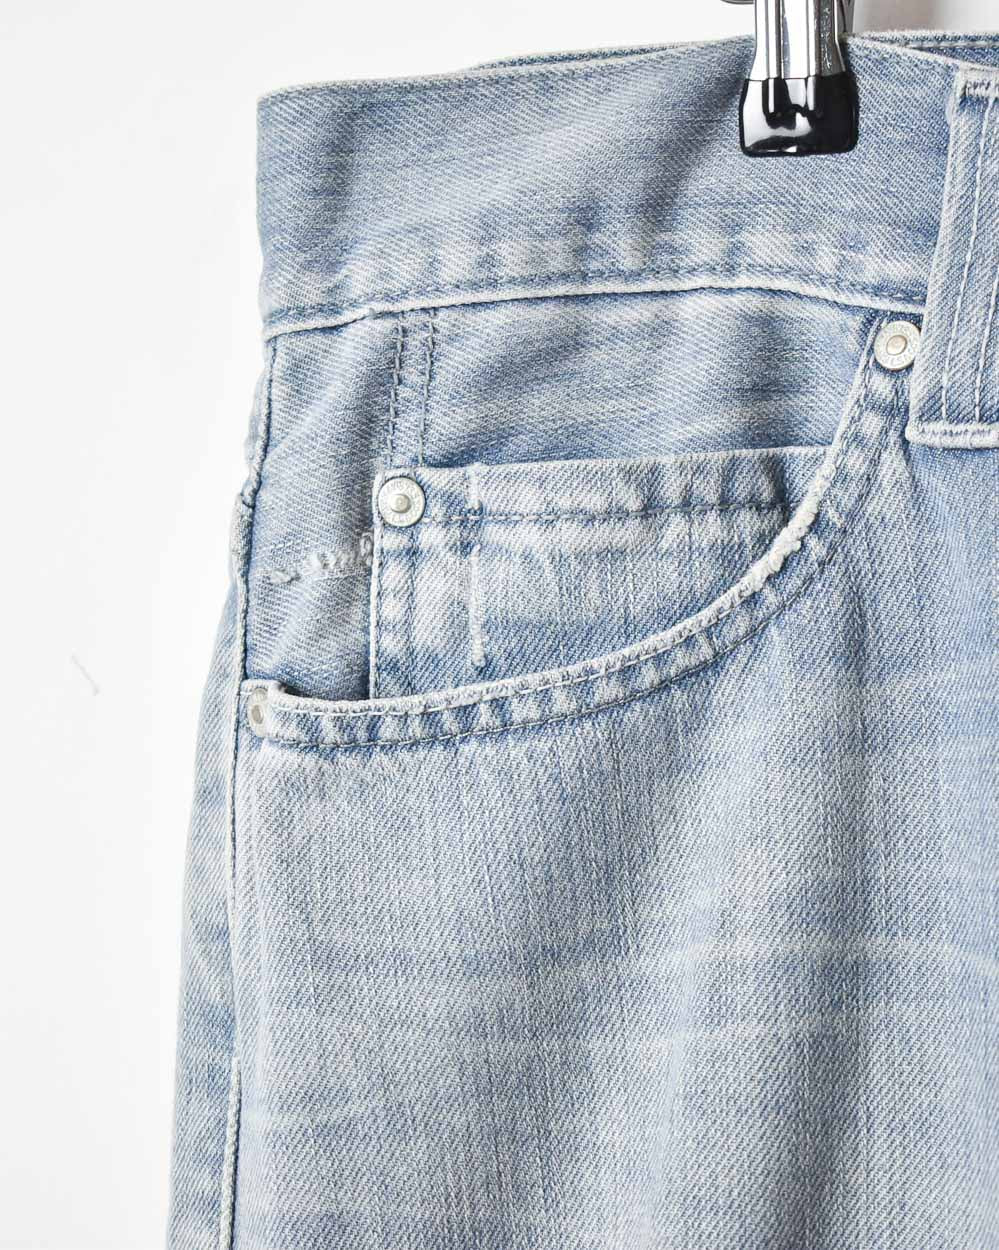 BabyBlue Levi's 506 Jeans - W38 L29